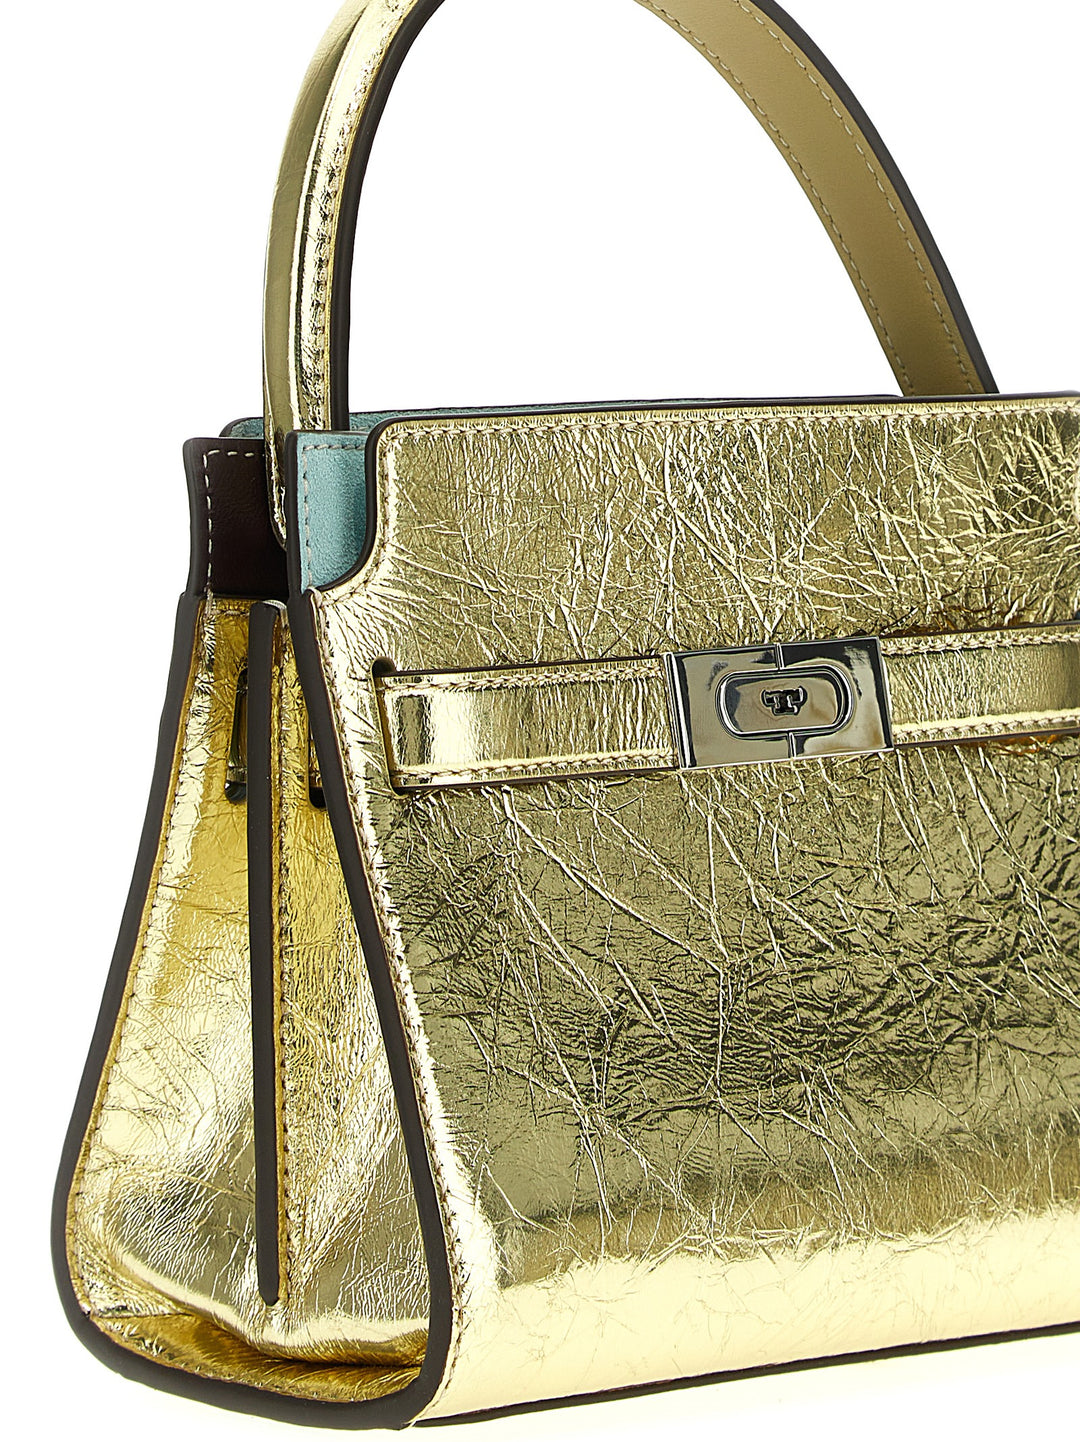 Radziwill Metallic Petite Double 'Lee Handbag Borse A Mano Oro